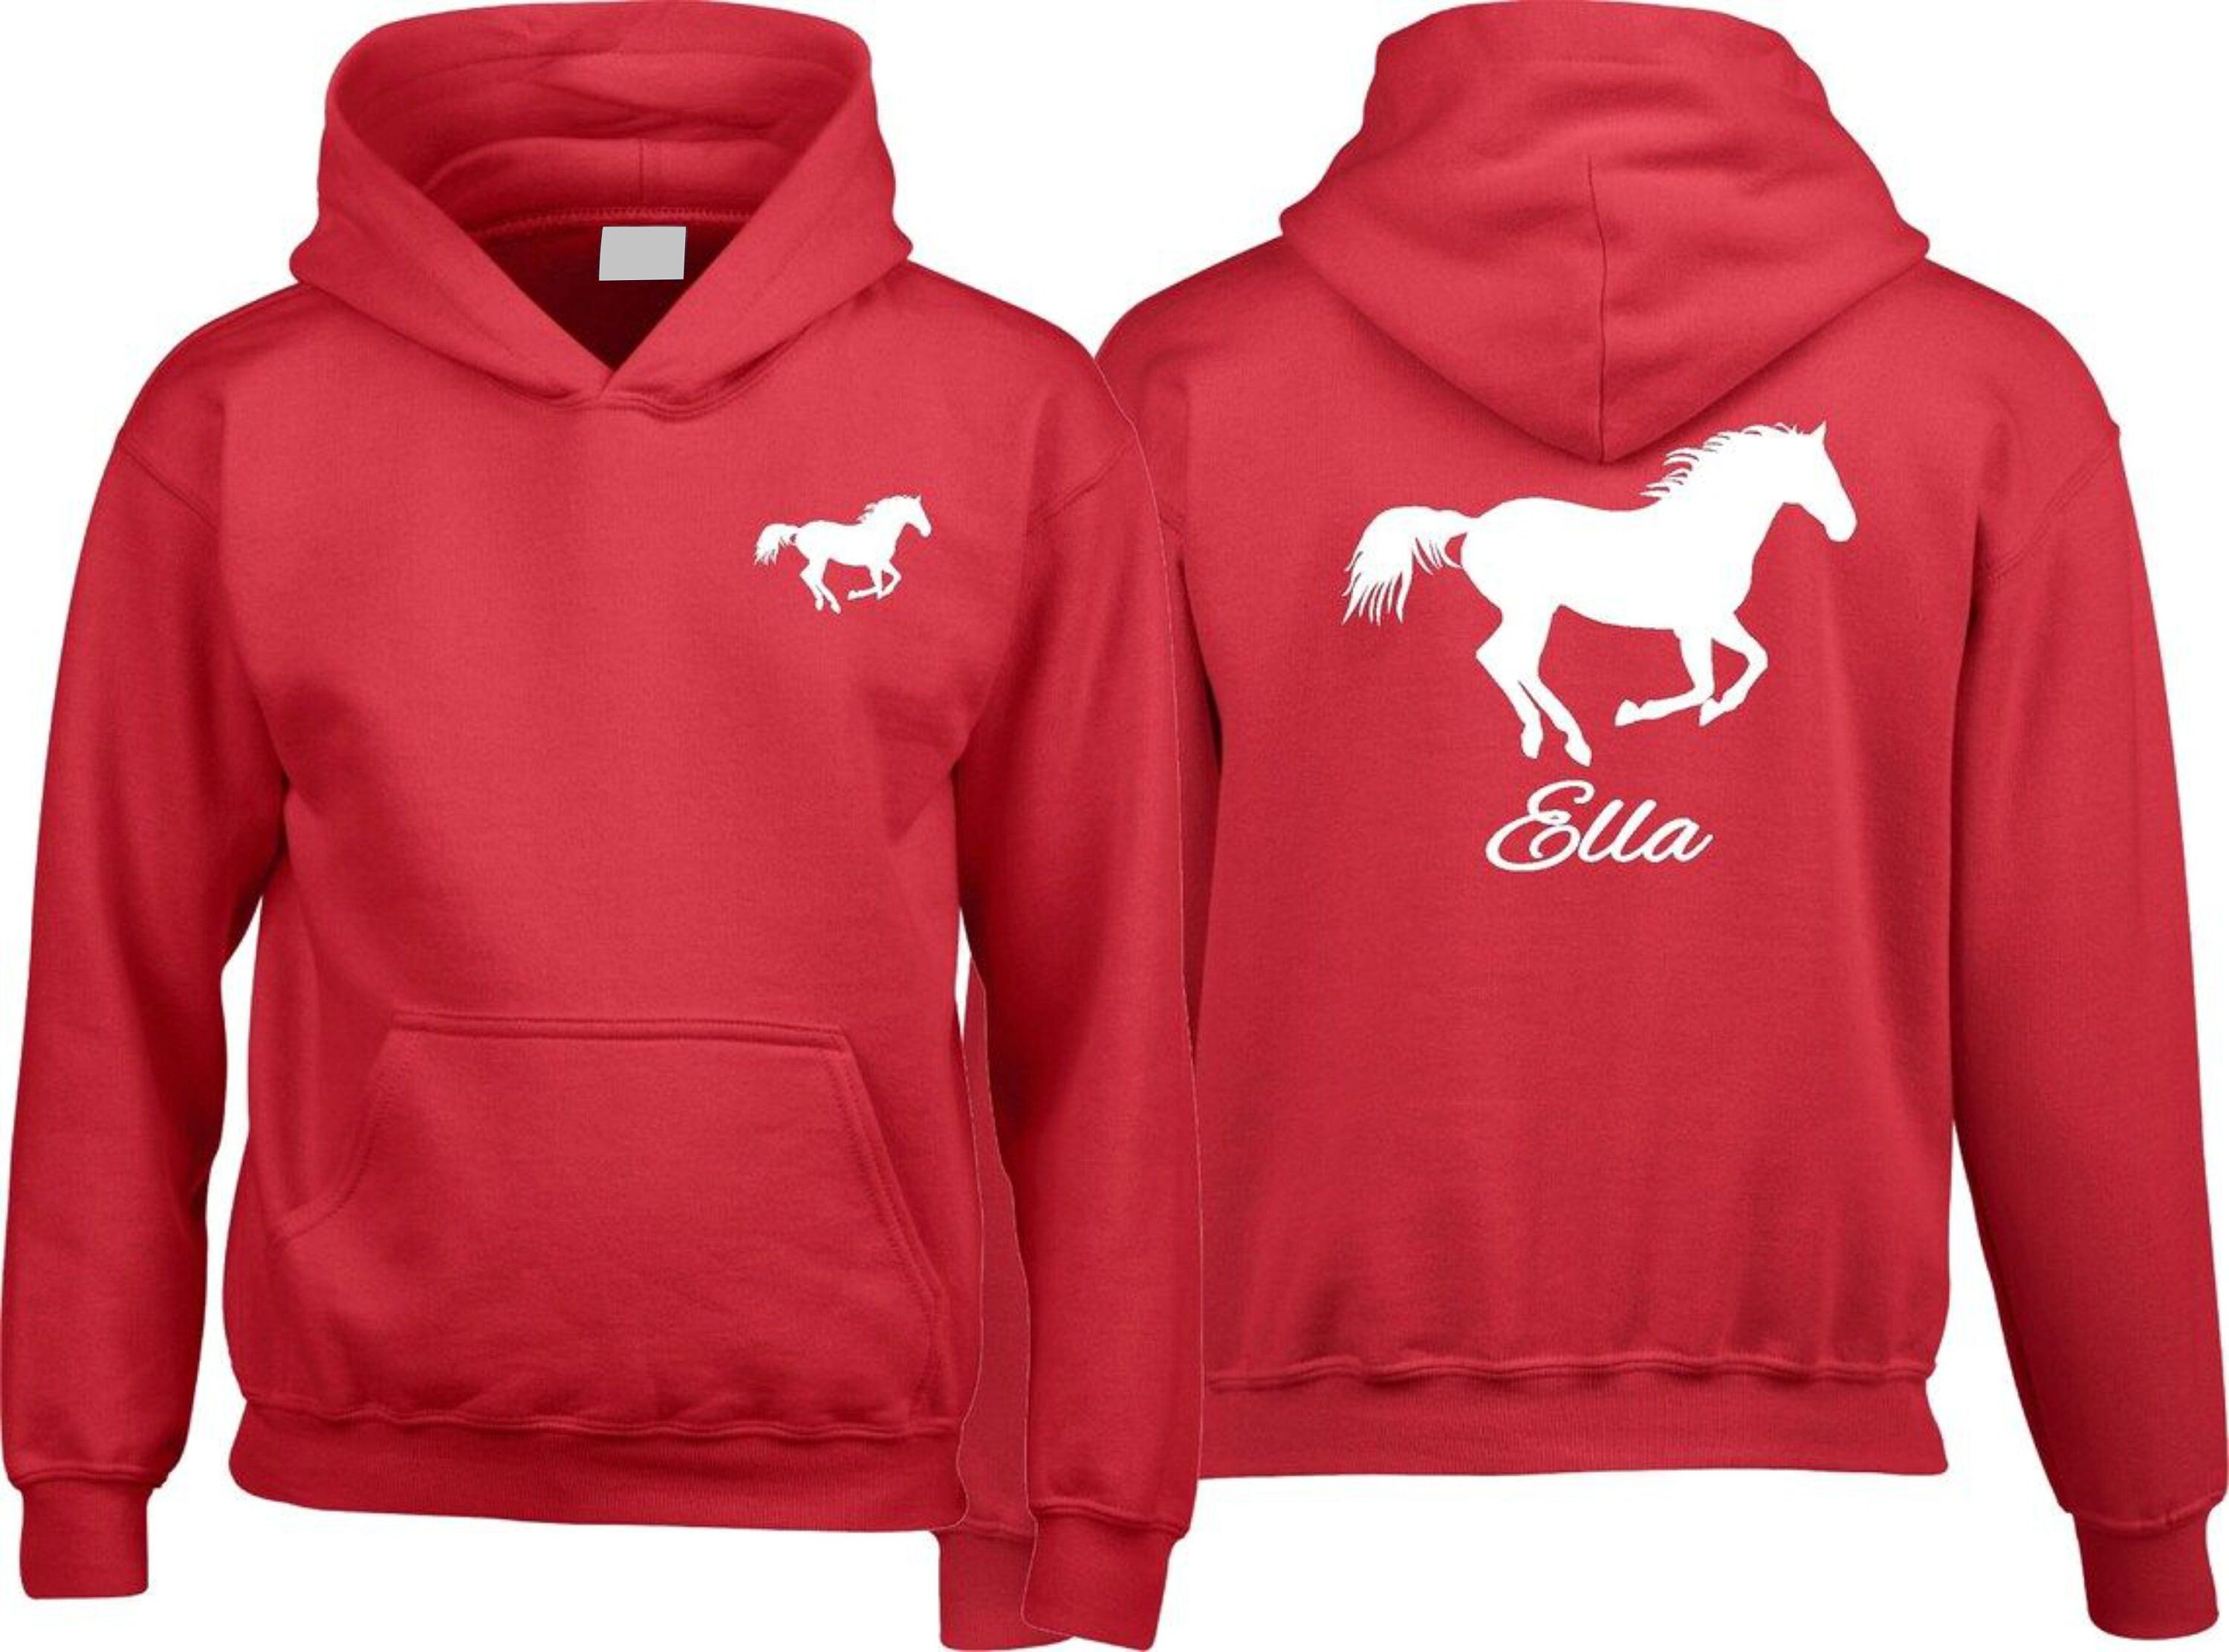 Personalised Horse Hoodie, Equestrian Rider, Stable Pony Cob Jockey Men Women Children Kids Boys Girls Unisex Jumper Christmas Gift Pullover